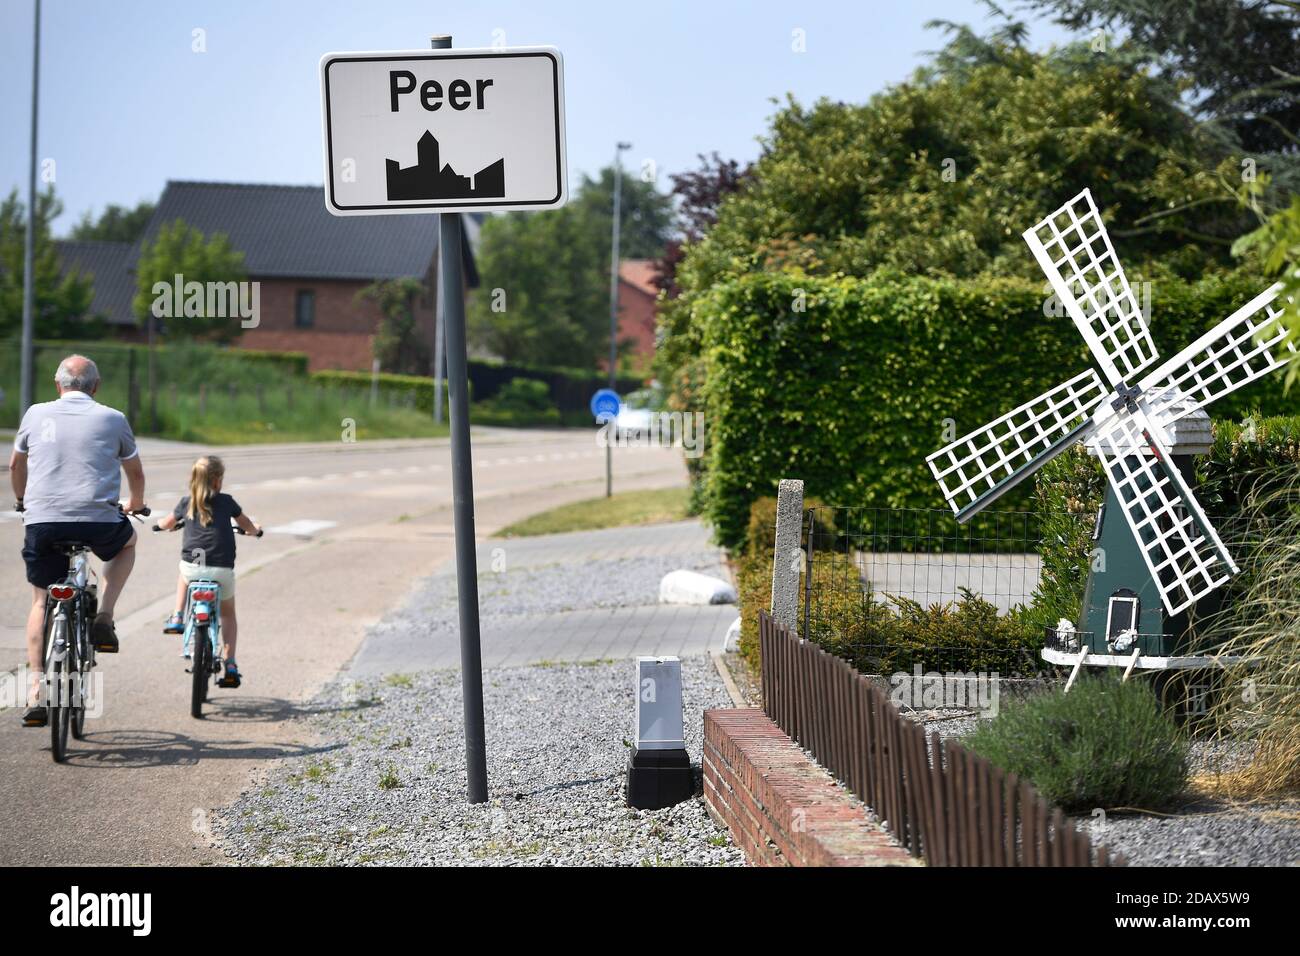 Illustration shows the name of the Peer municipality on a road sign, Thursday 17 May 2018. BELGA PHOTO YORICK JANSENS Stock Photo